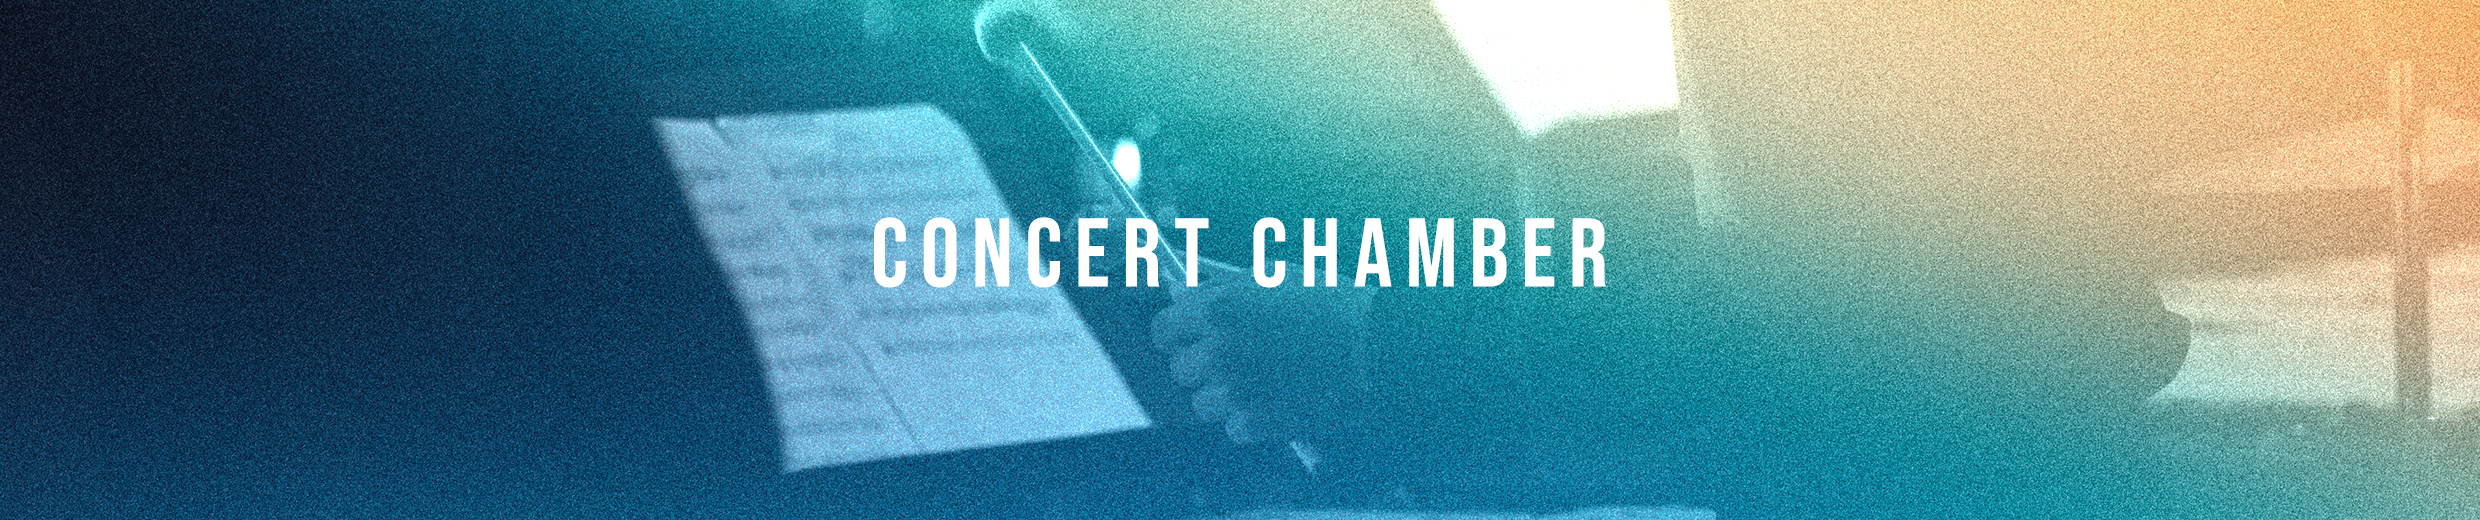 Header image saying Concert Chamber